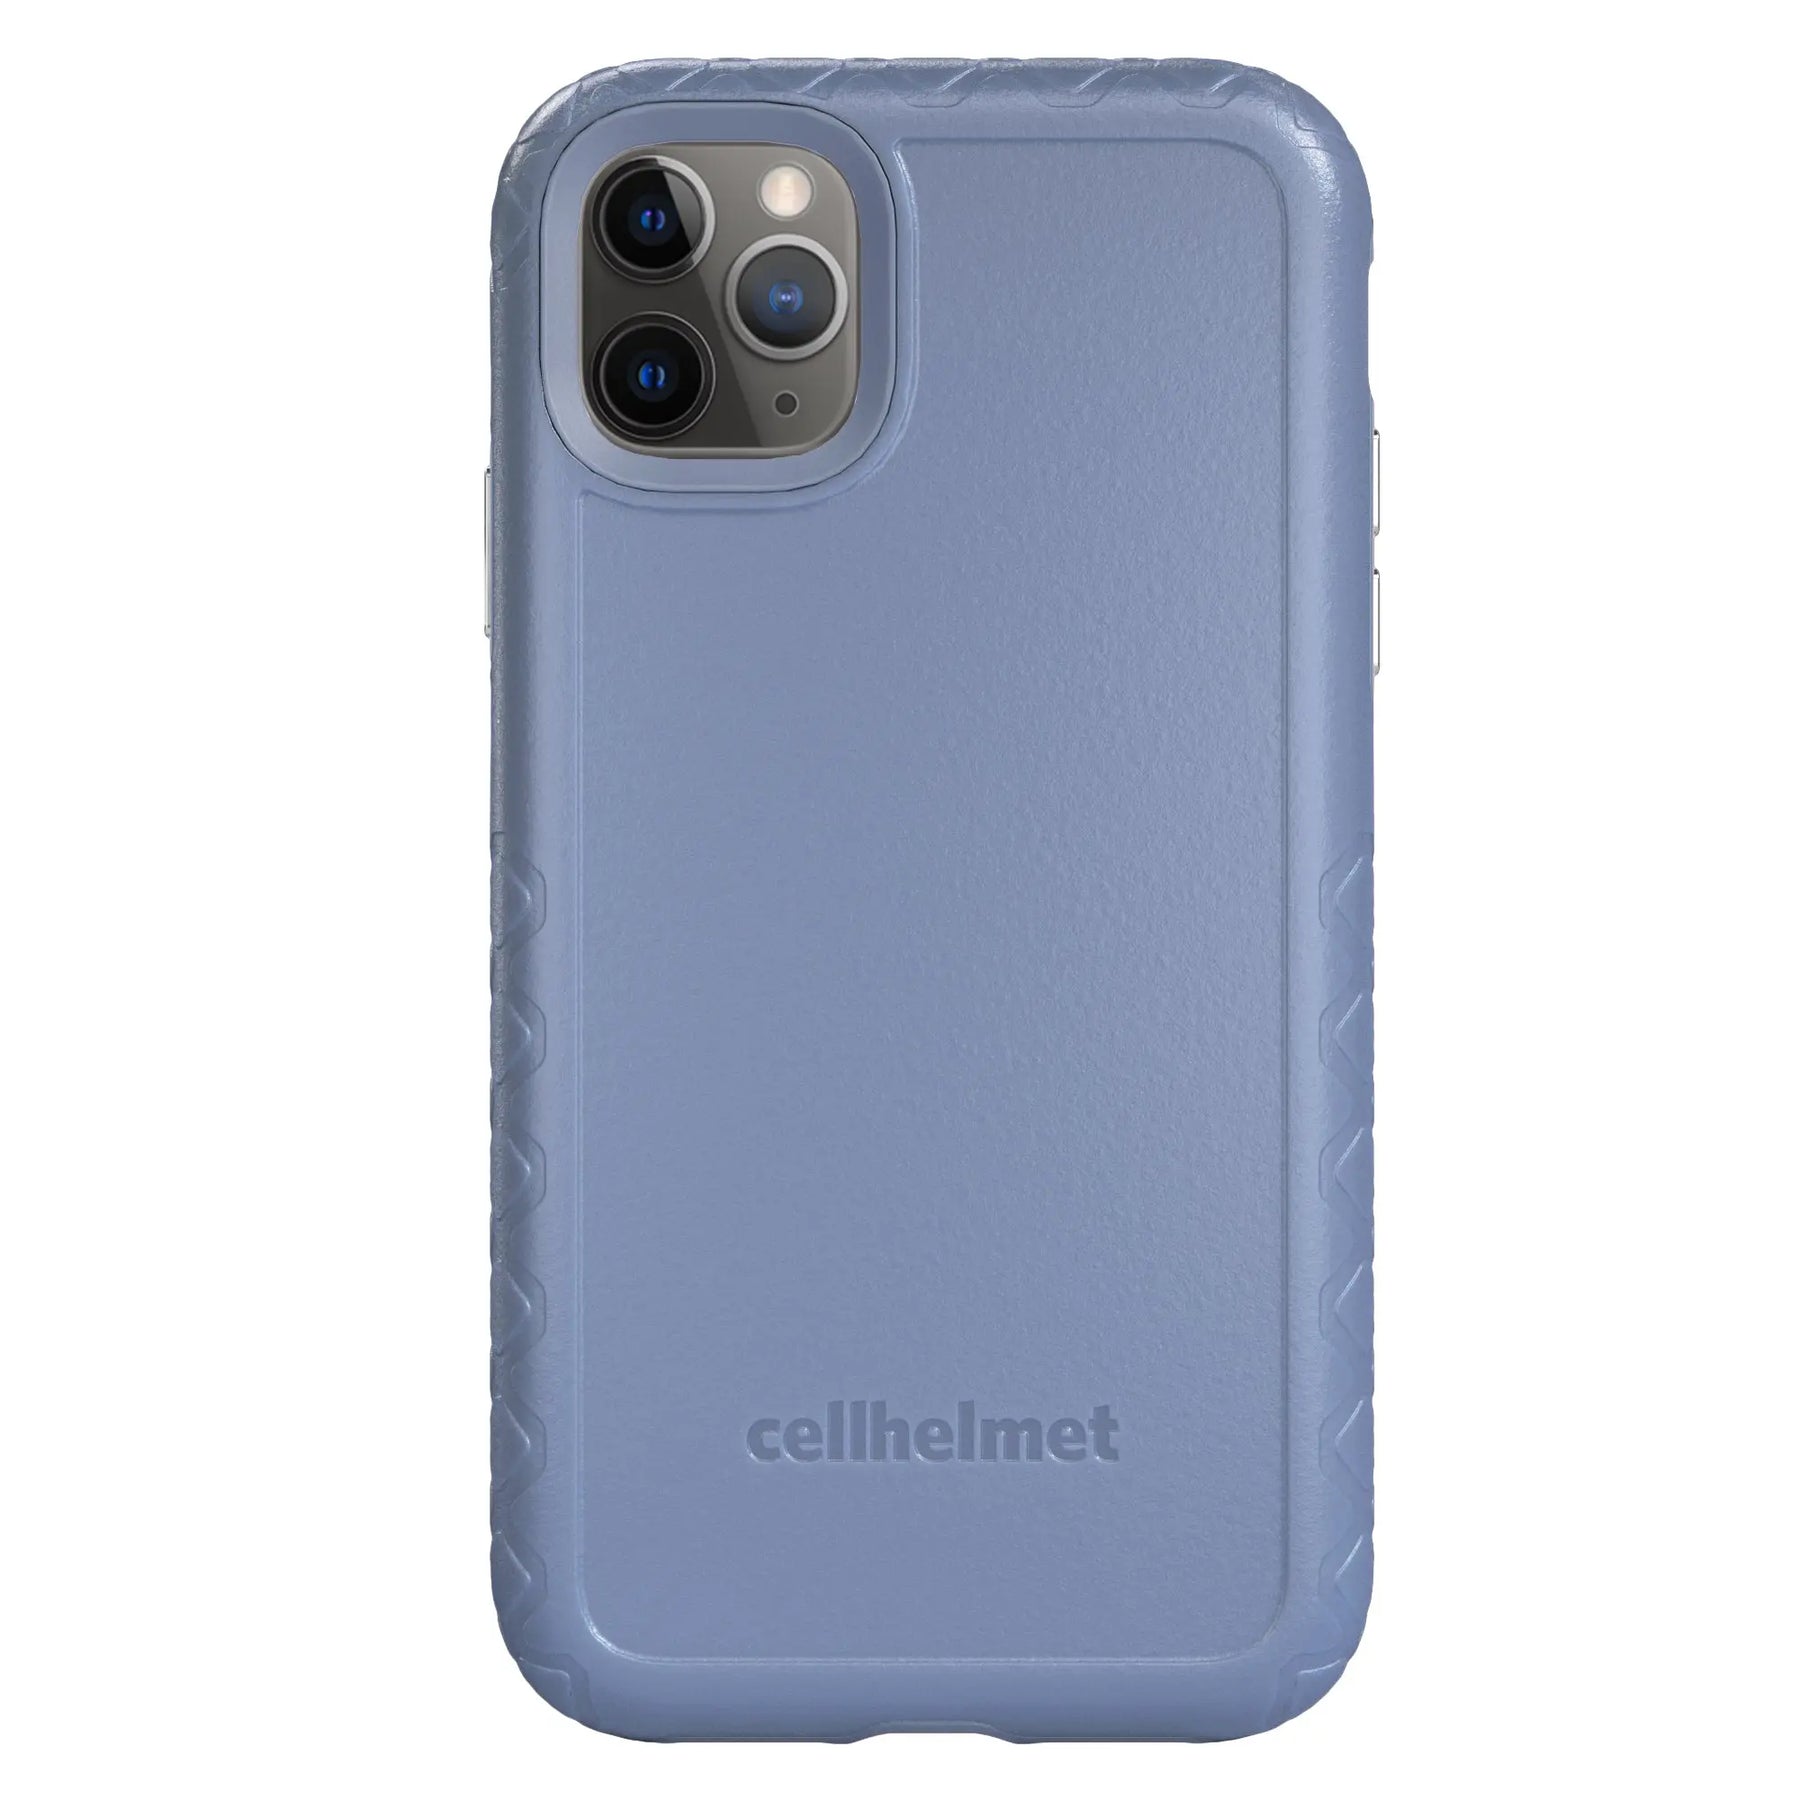 Blue cellhelmet Customizable Case for iPhone 11 Pro Max